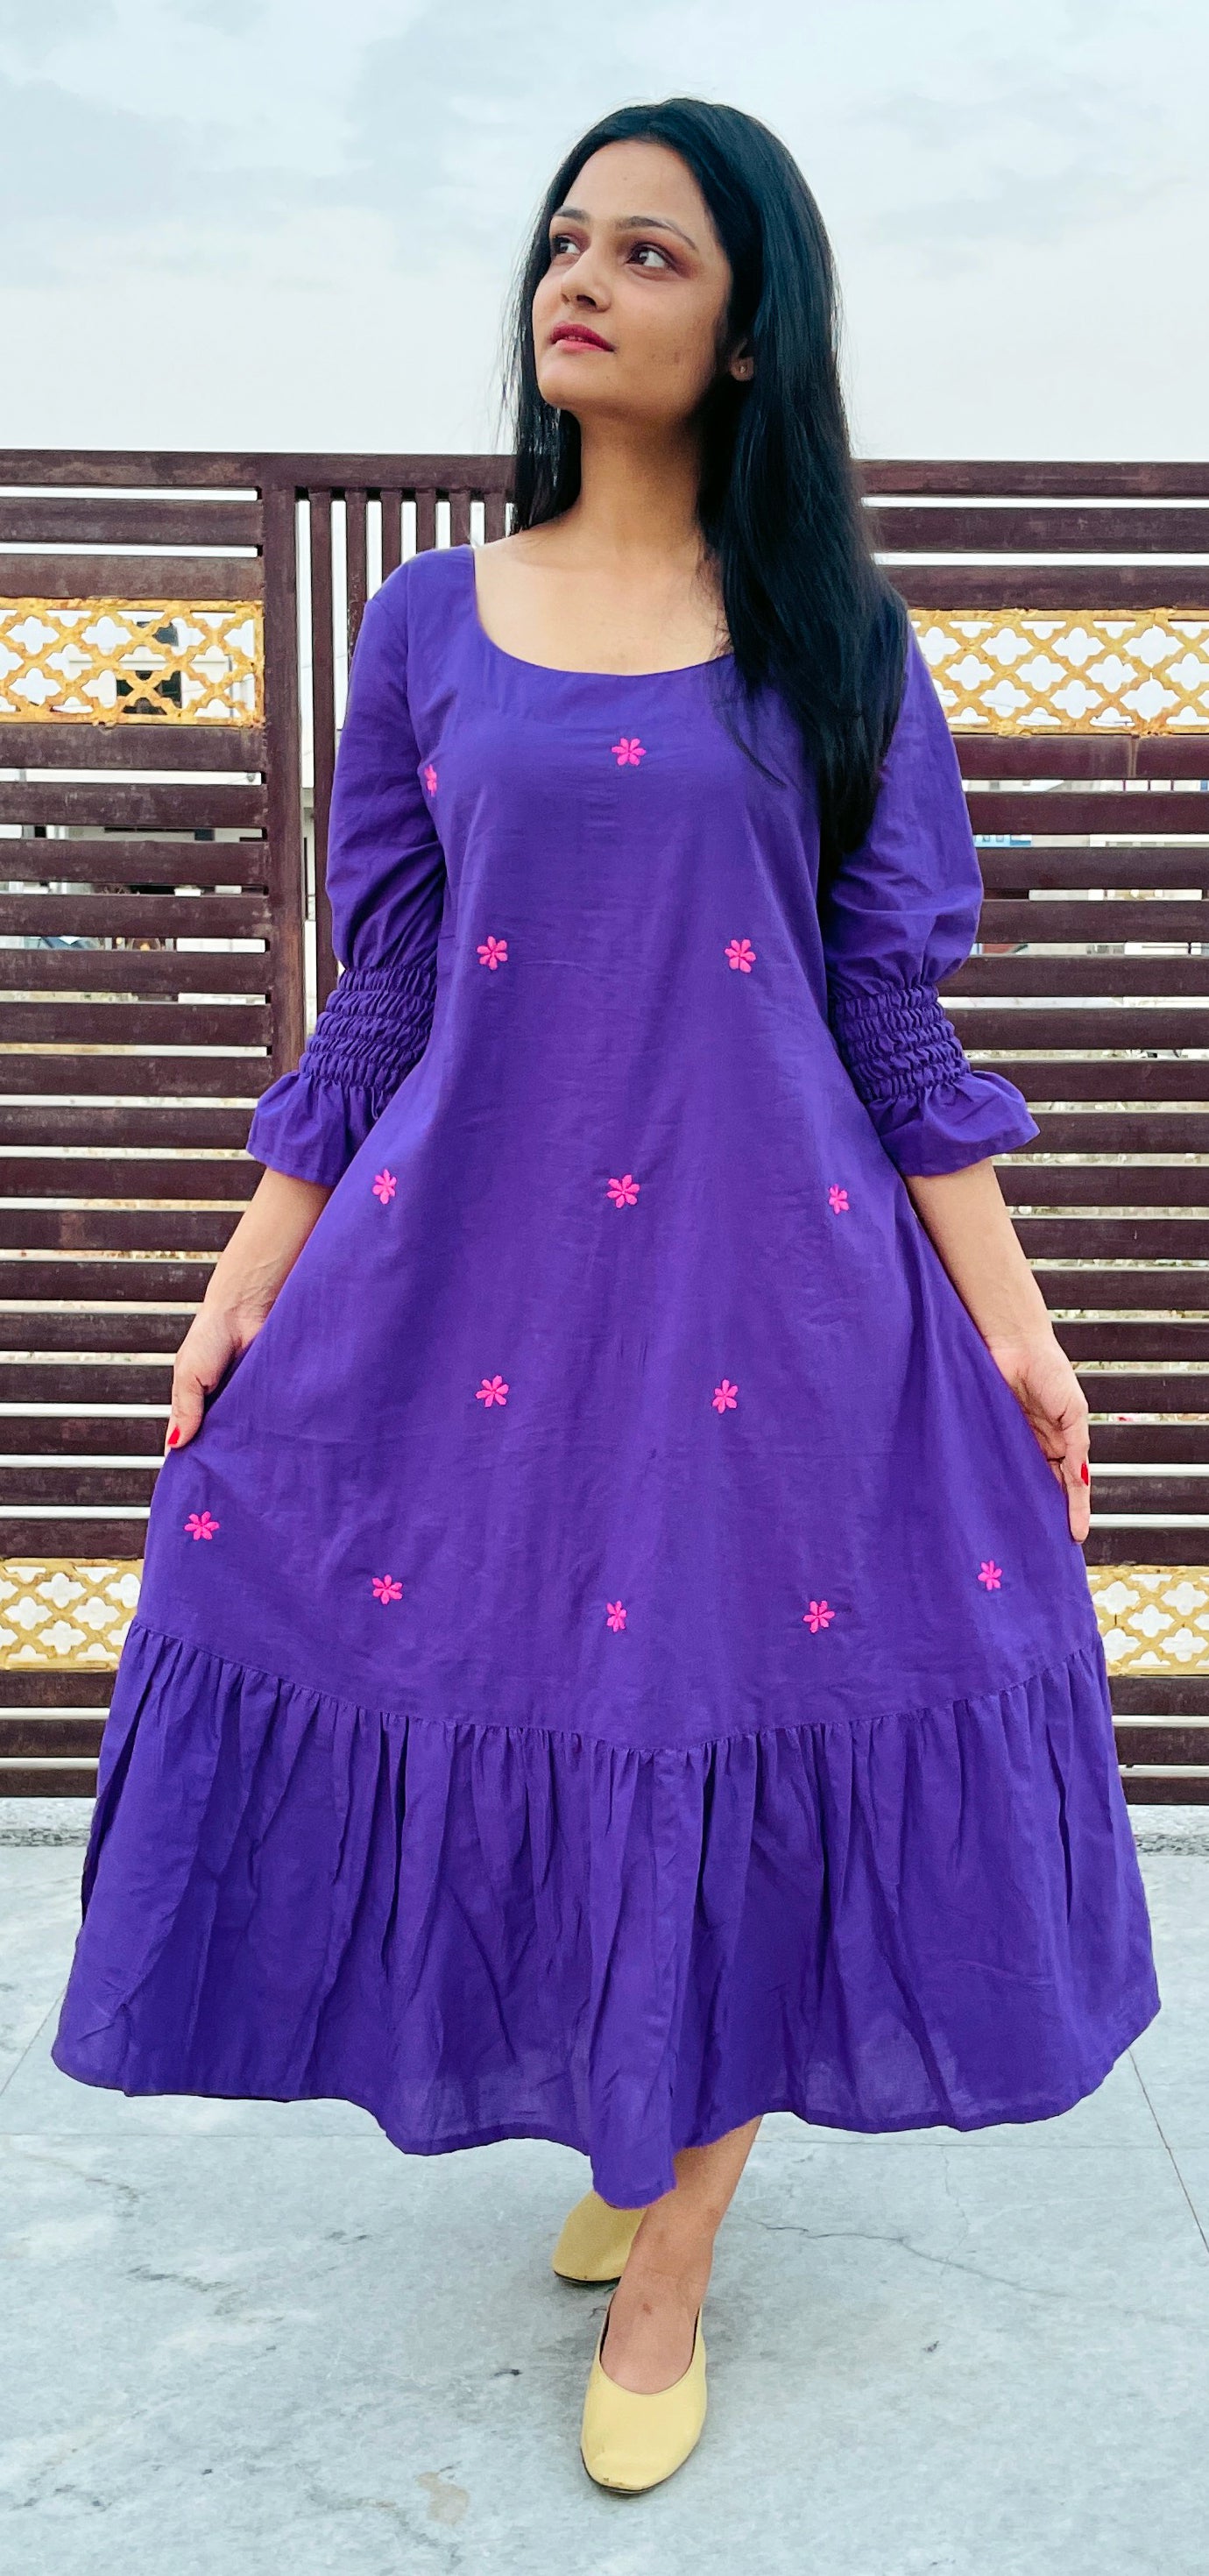 100 % Pure Voile Cotton Summer Floral Hand Embroidery Purple Lilac Lavender Color Dress